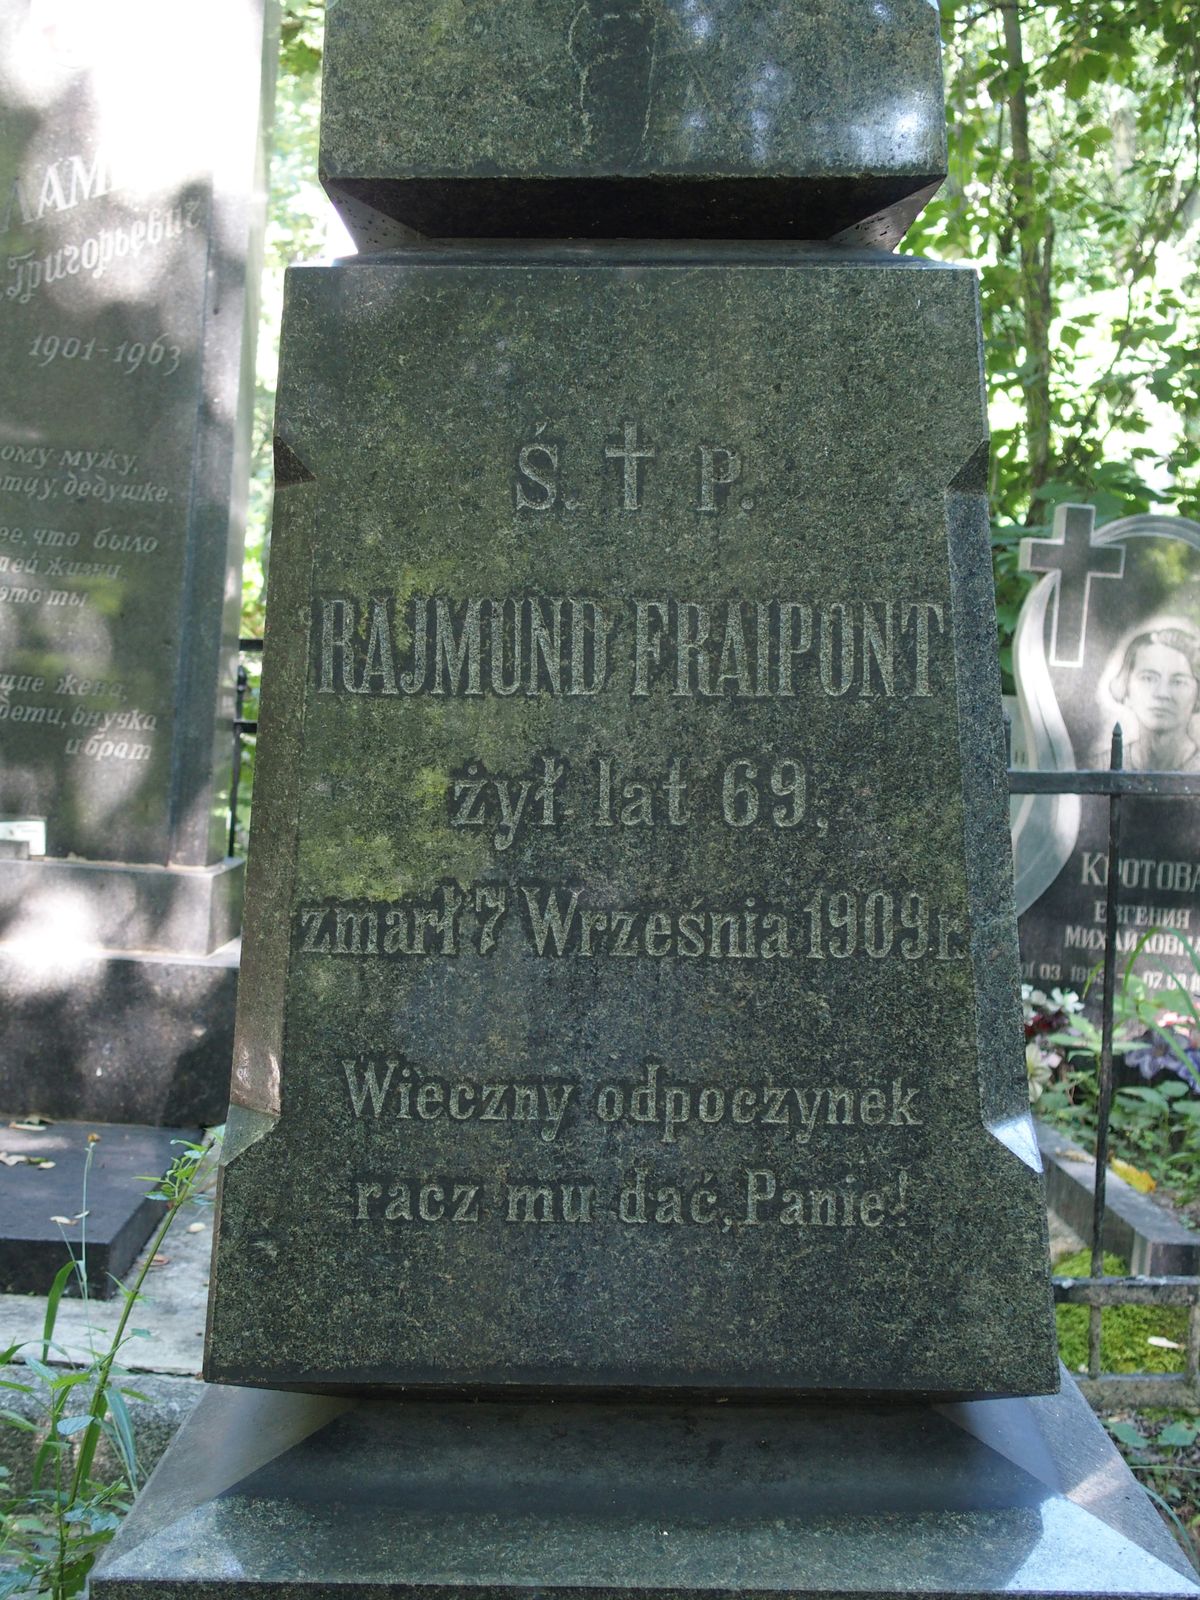 Inscription from the tombstone of Rajmund Fraipont